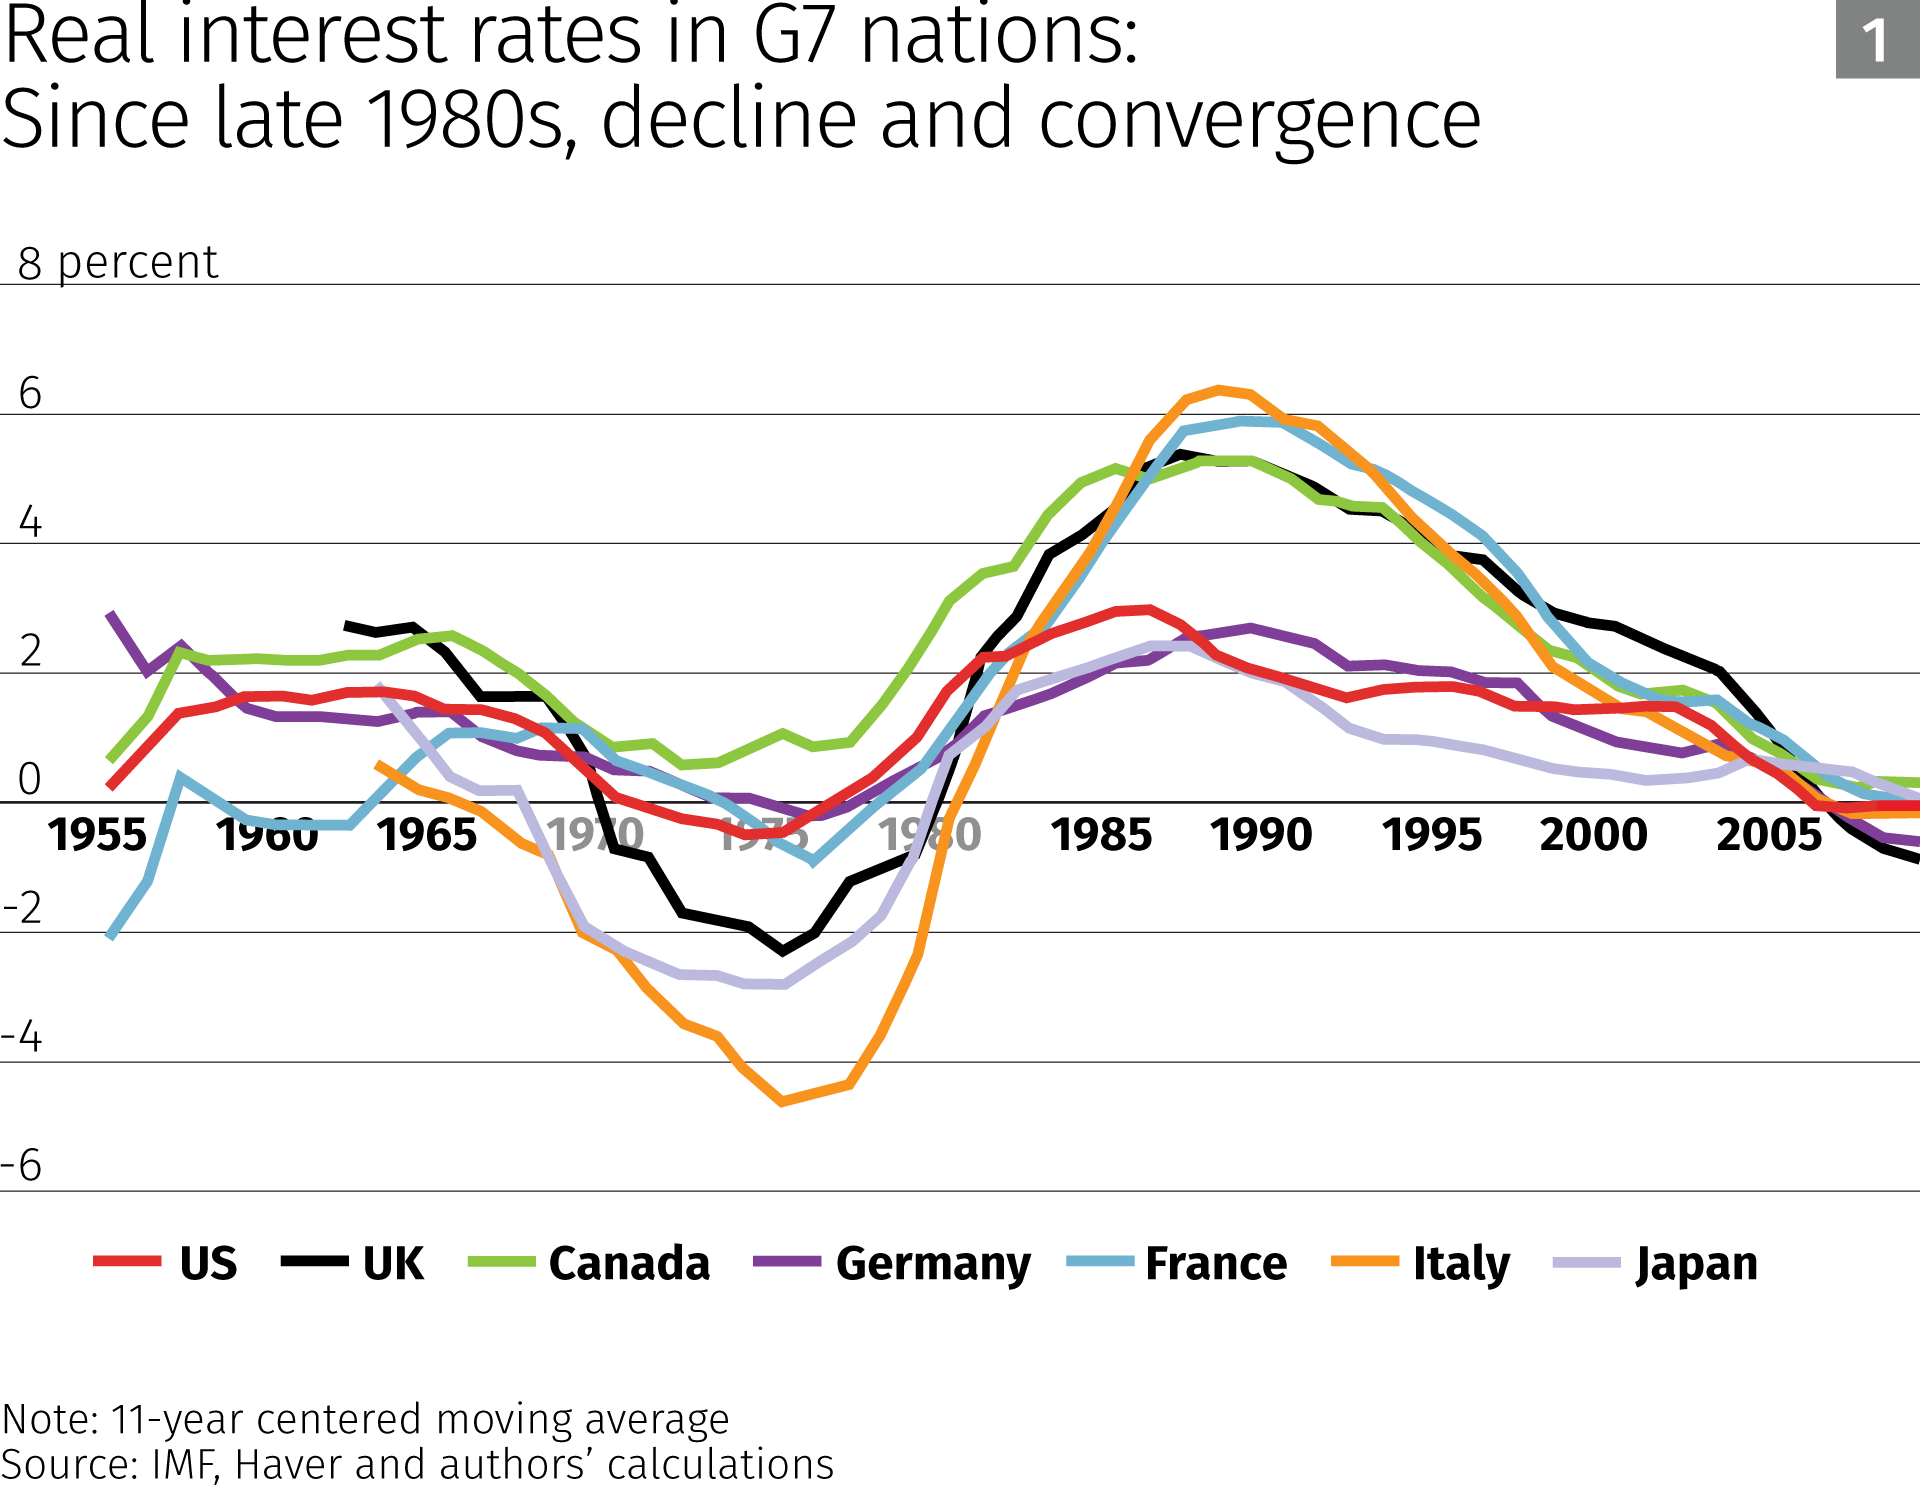 Va Mortgage Rate History Chart